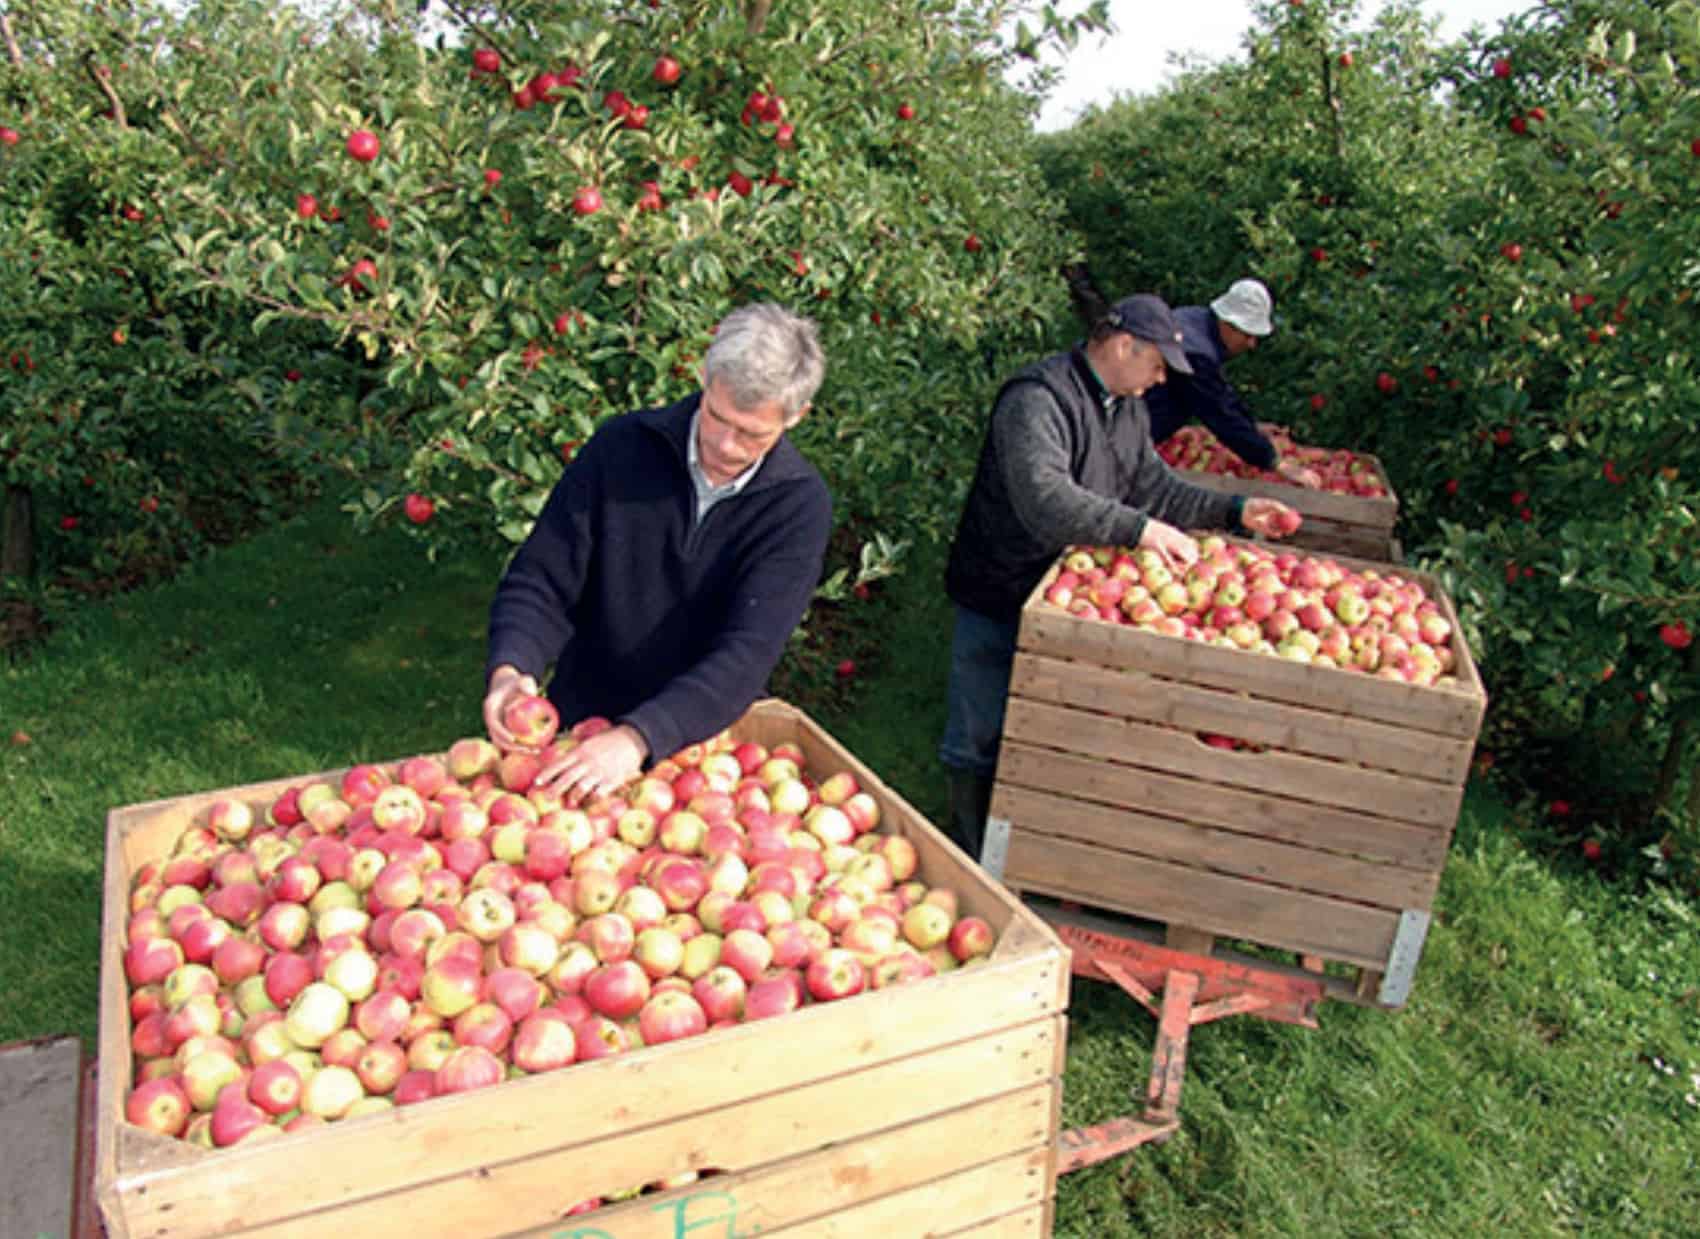 Farmers harvesting apples